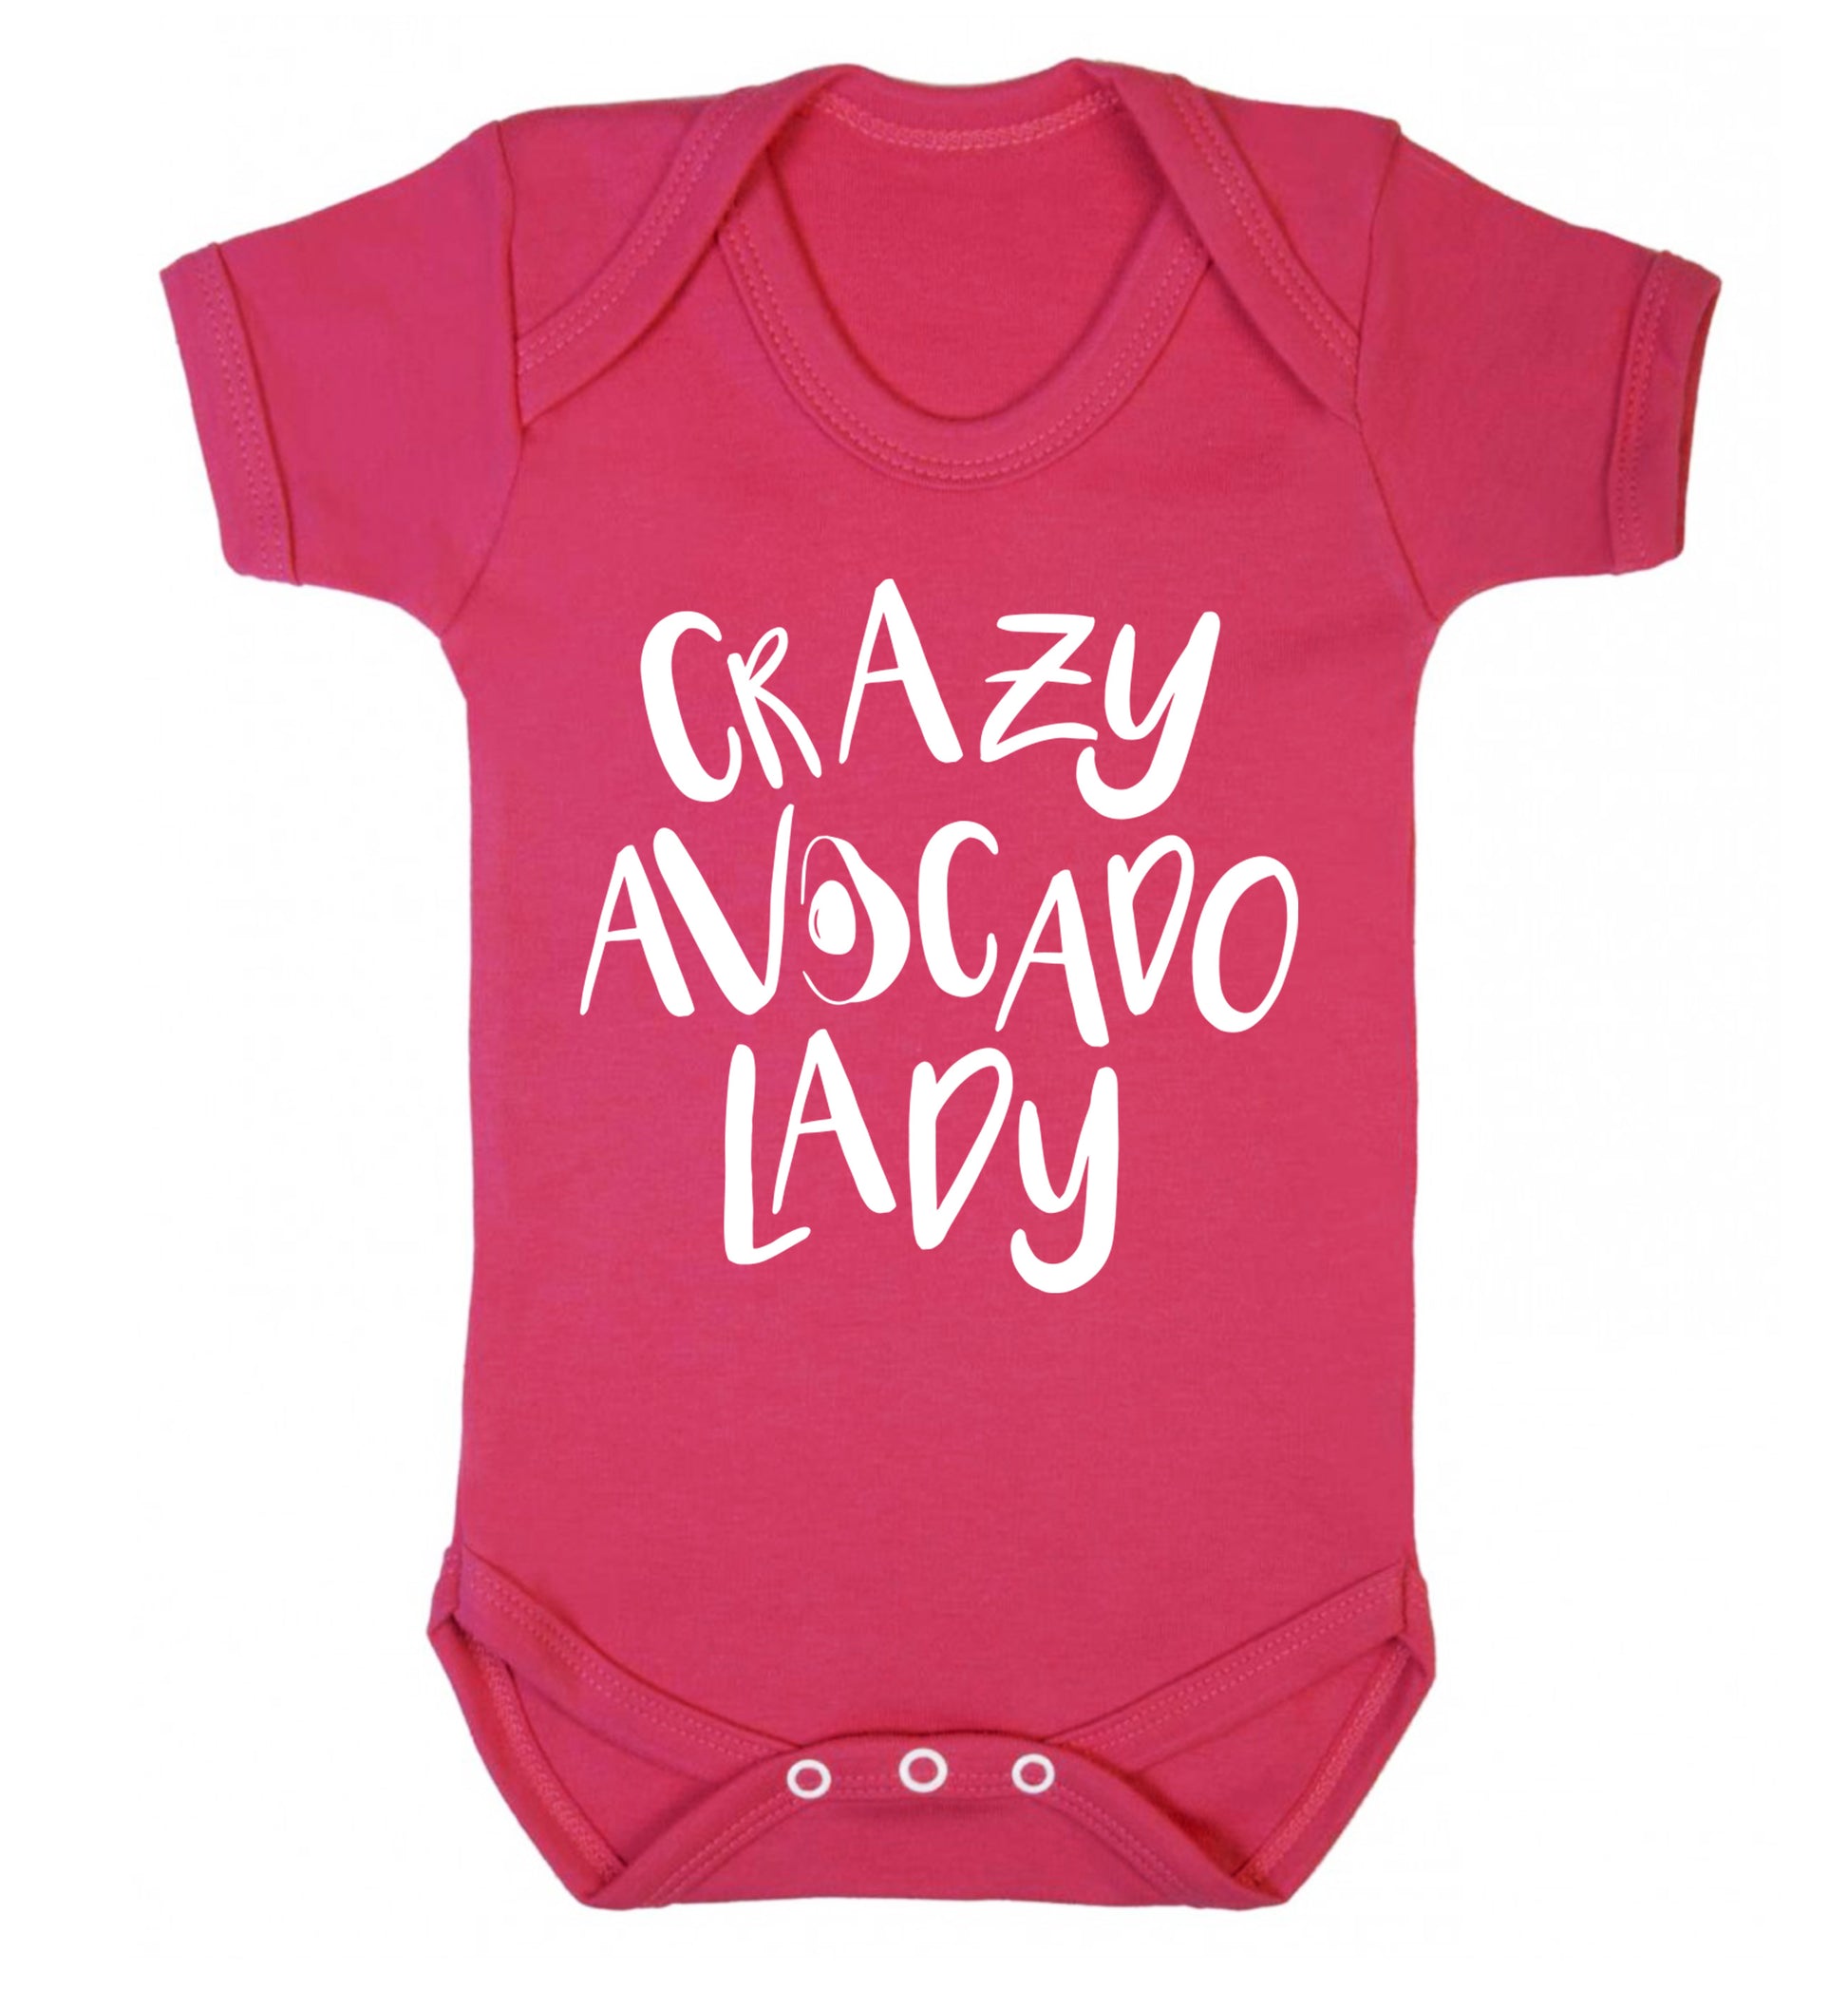 Crazy avocado lady Baby Vest dark pink 18-24 months